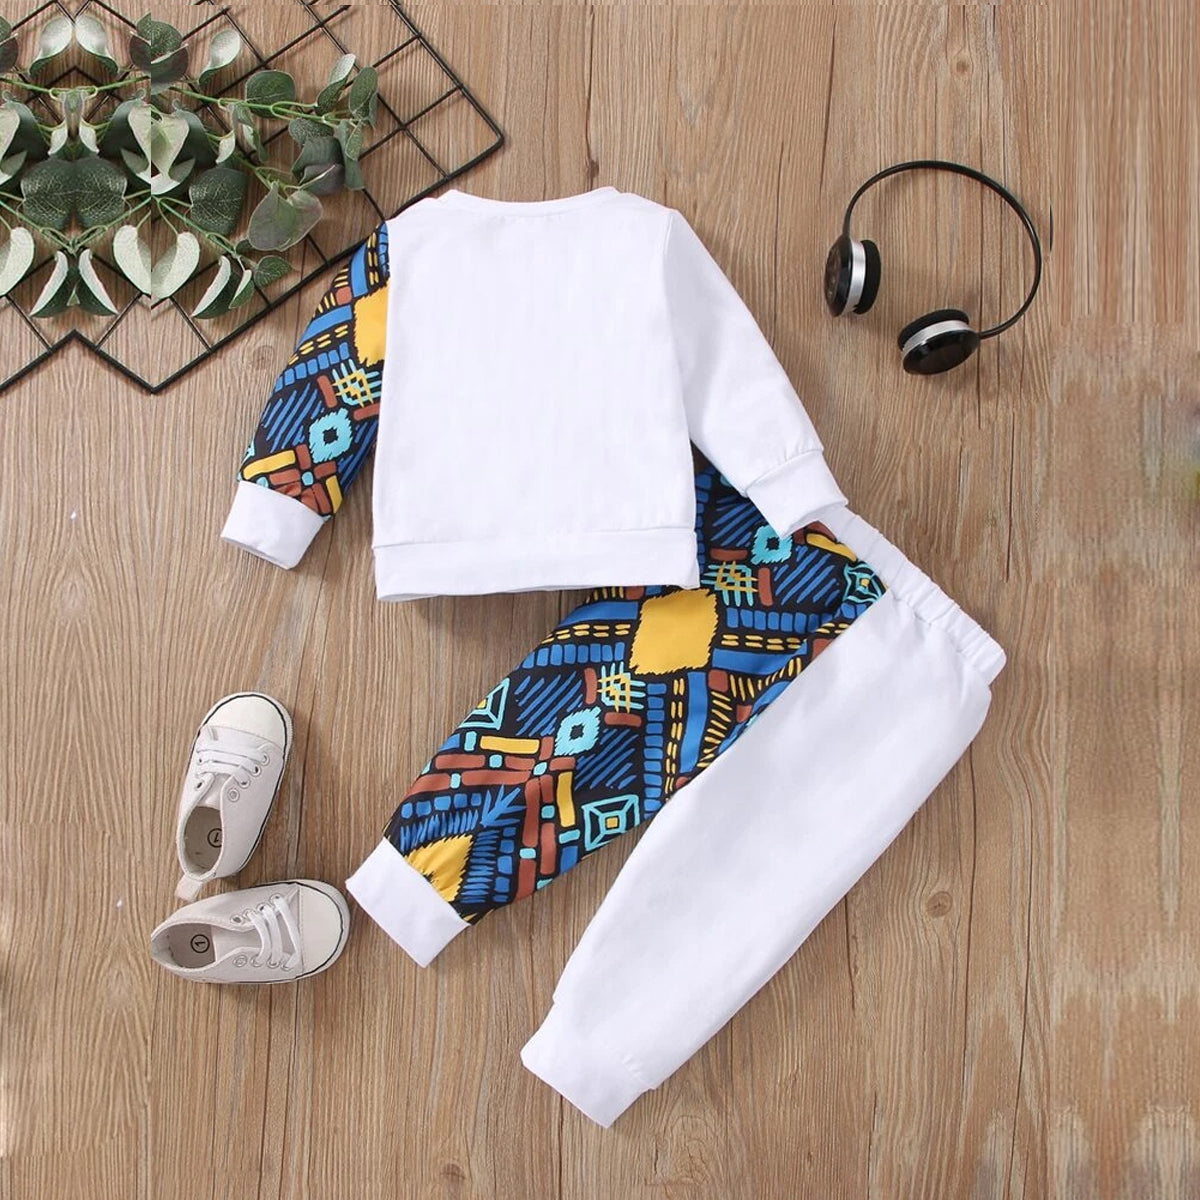 Venutaloza Stylish Baby Set White Thermal Print & Car & Tree Pullover Design (Combo Pack Of 2) T-Shirt & Pants.